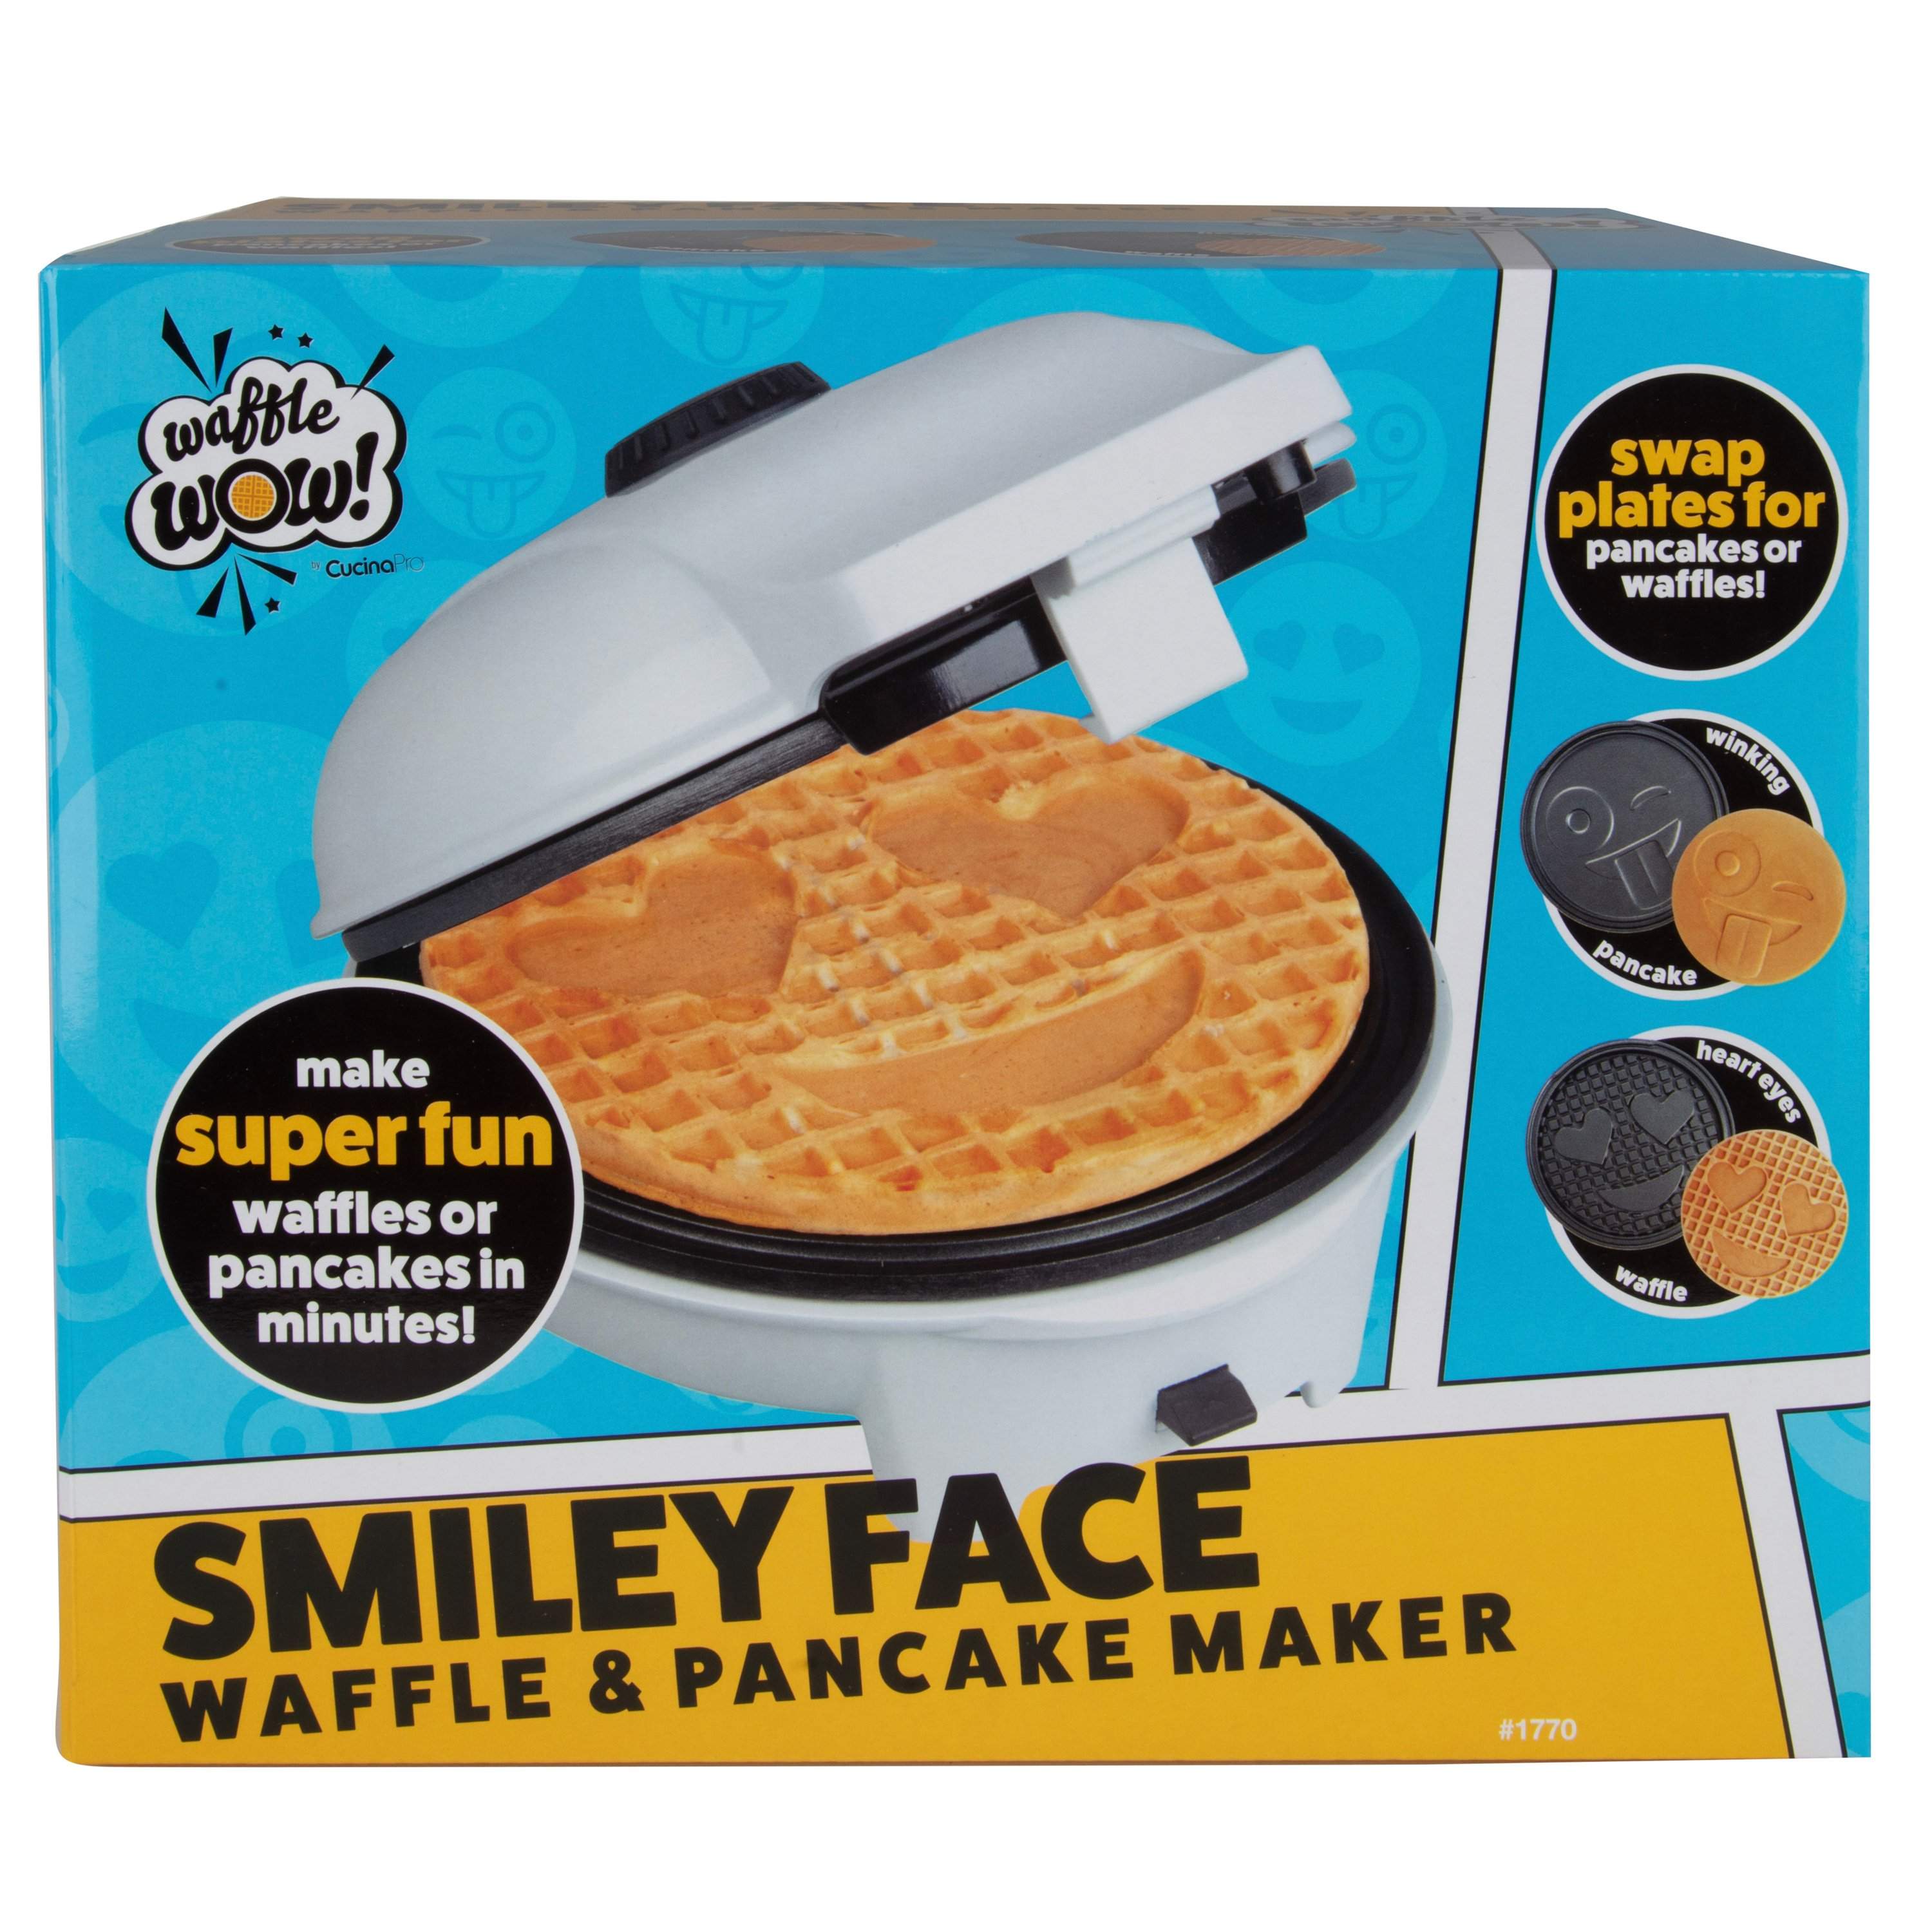 Bella Printed Mini Waffle Maker - Yellow Smiley - Yellow Smiley